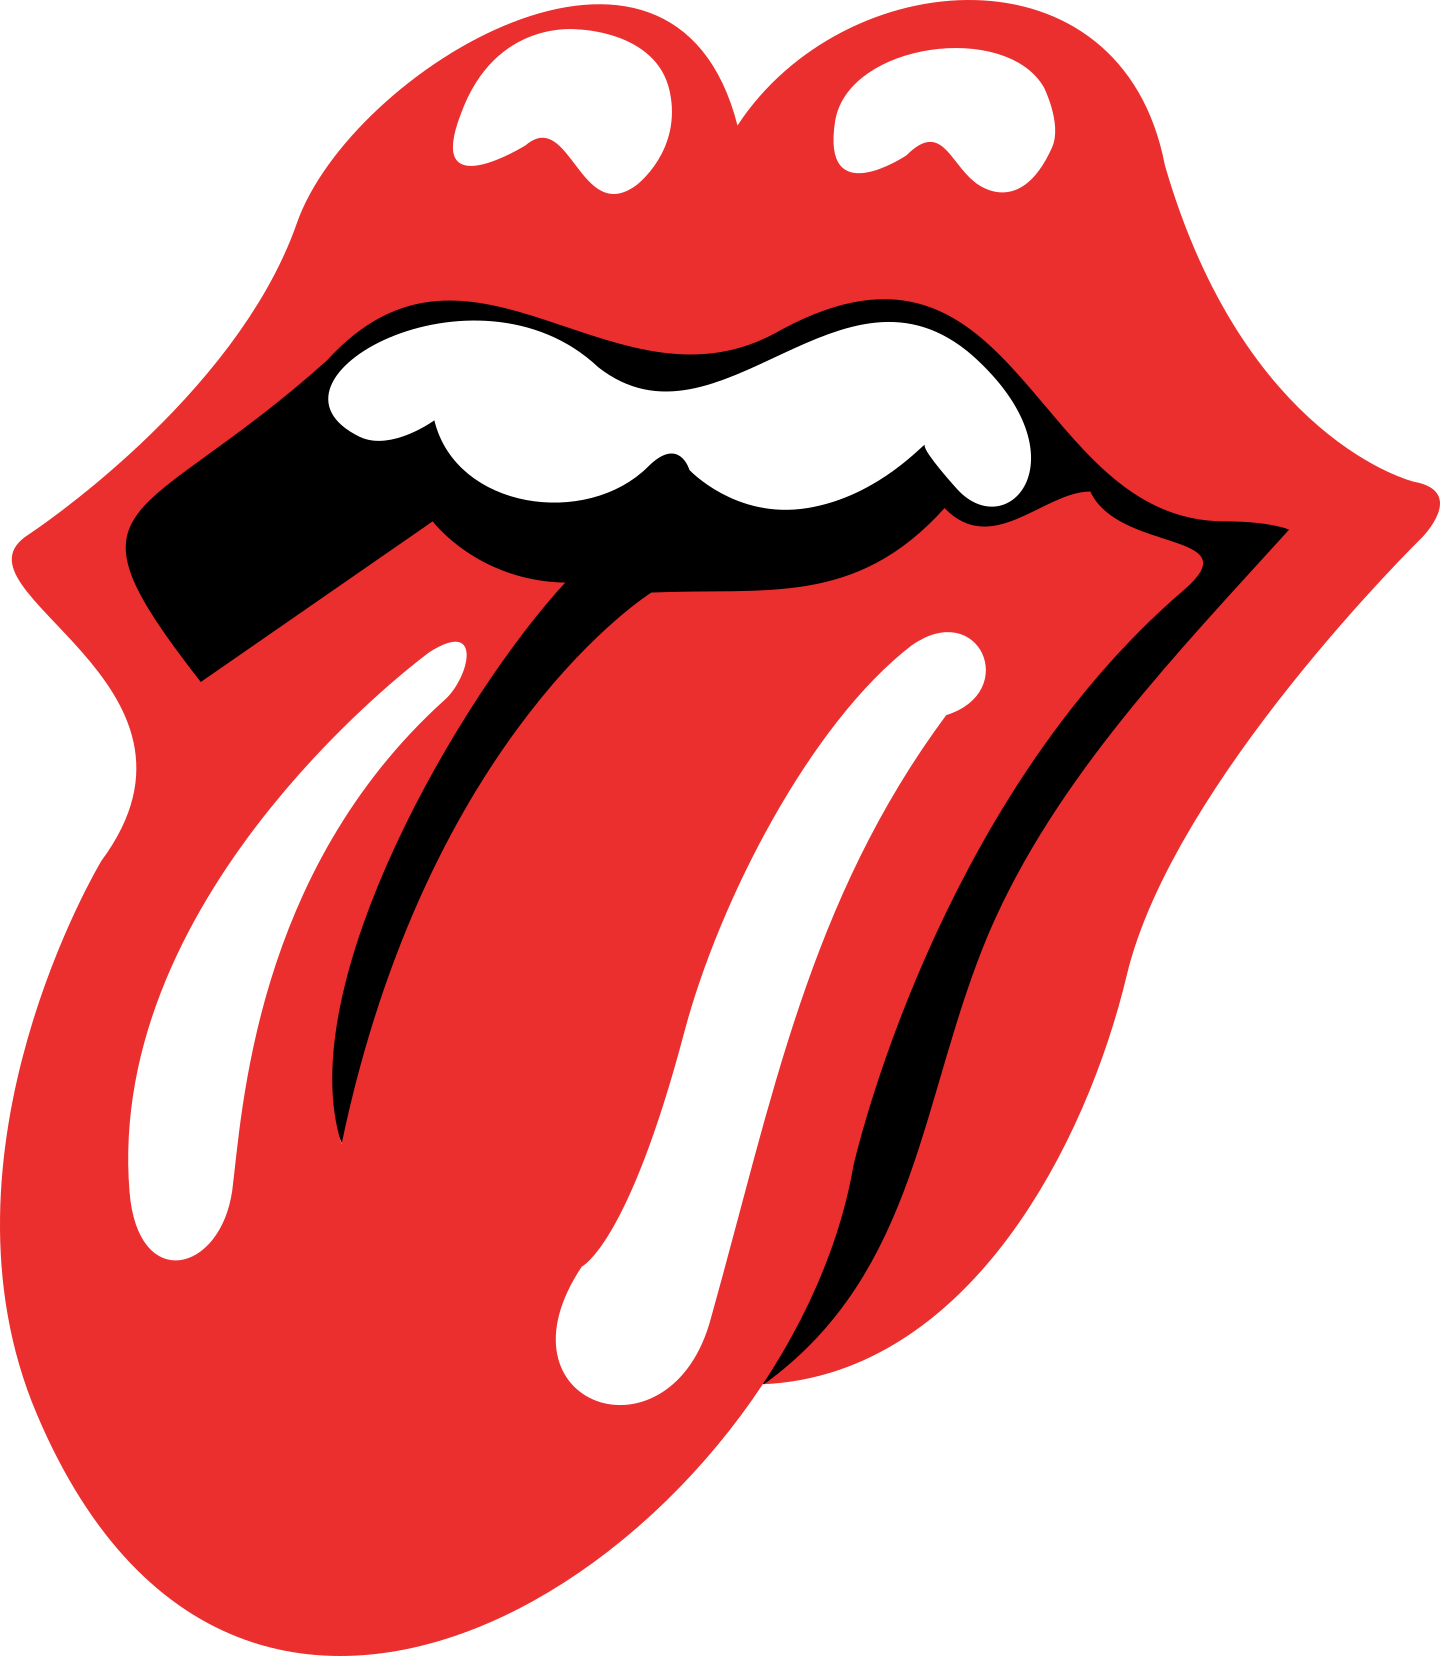 rolling stones logo 2 - The Rolling Stones Logo